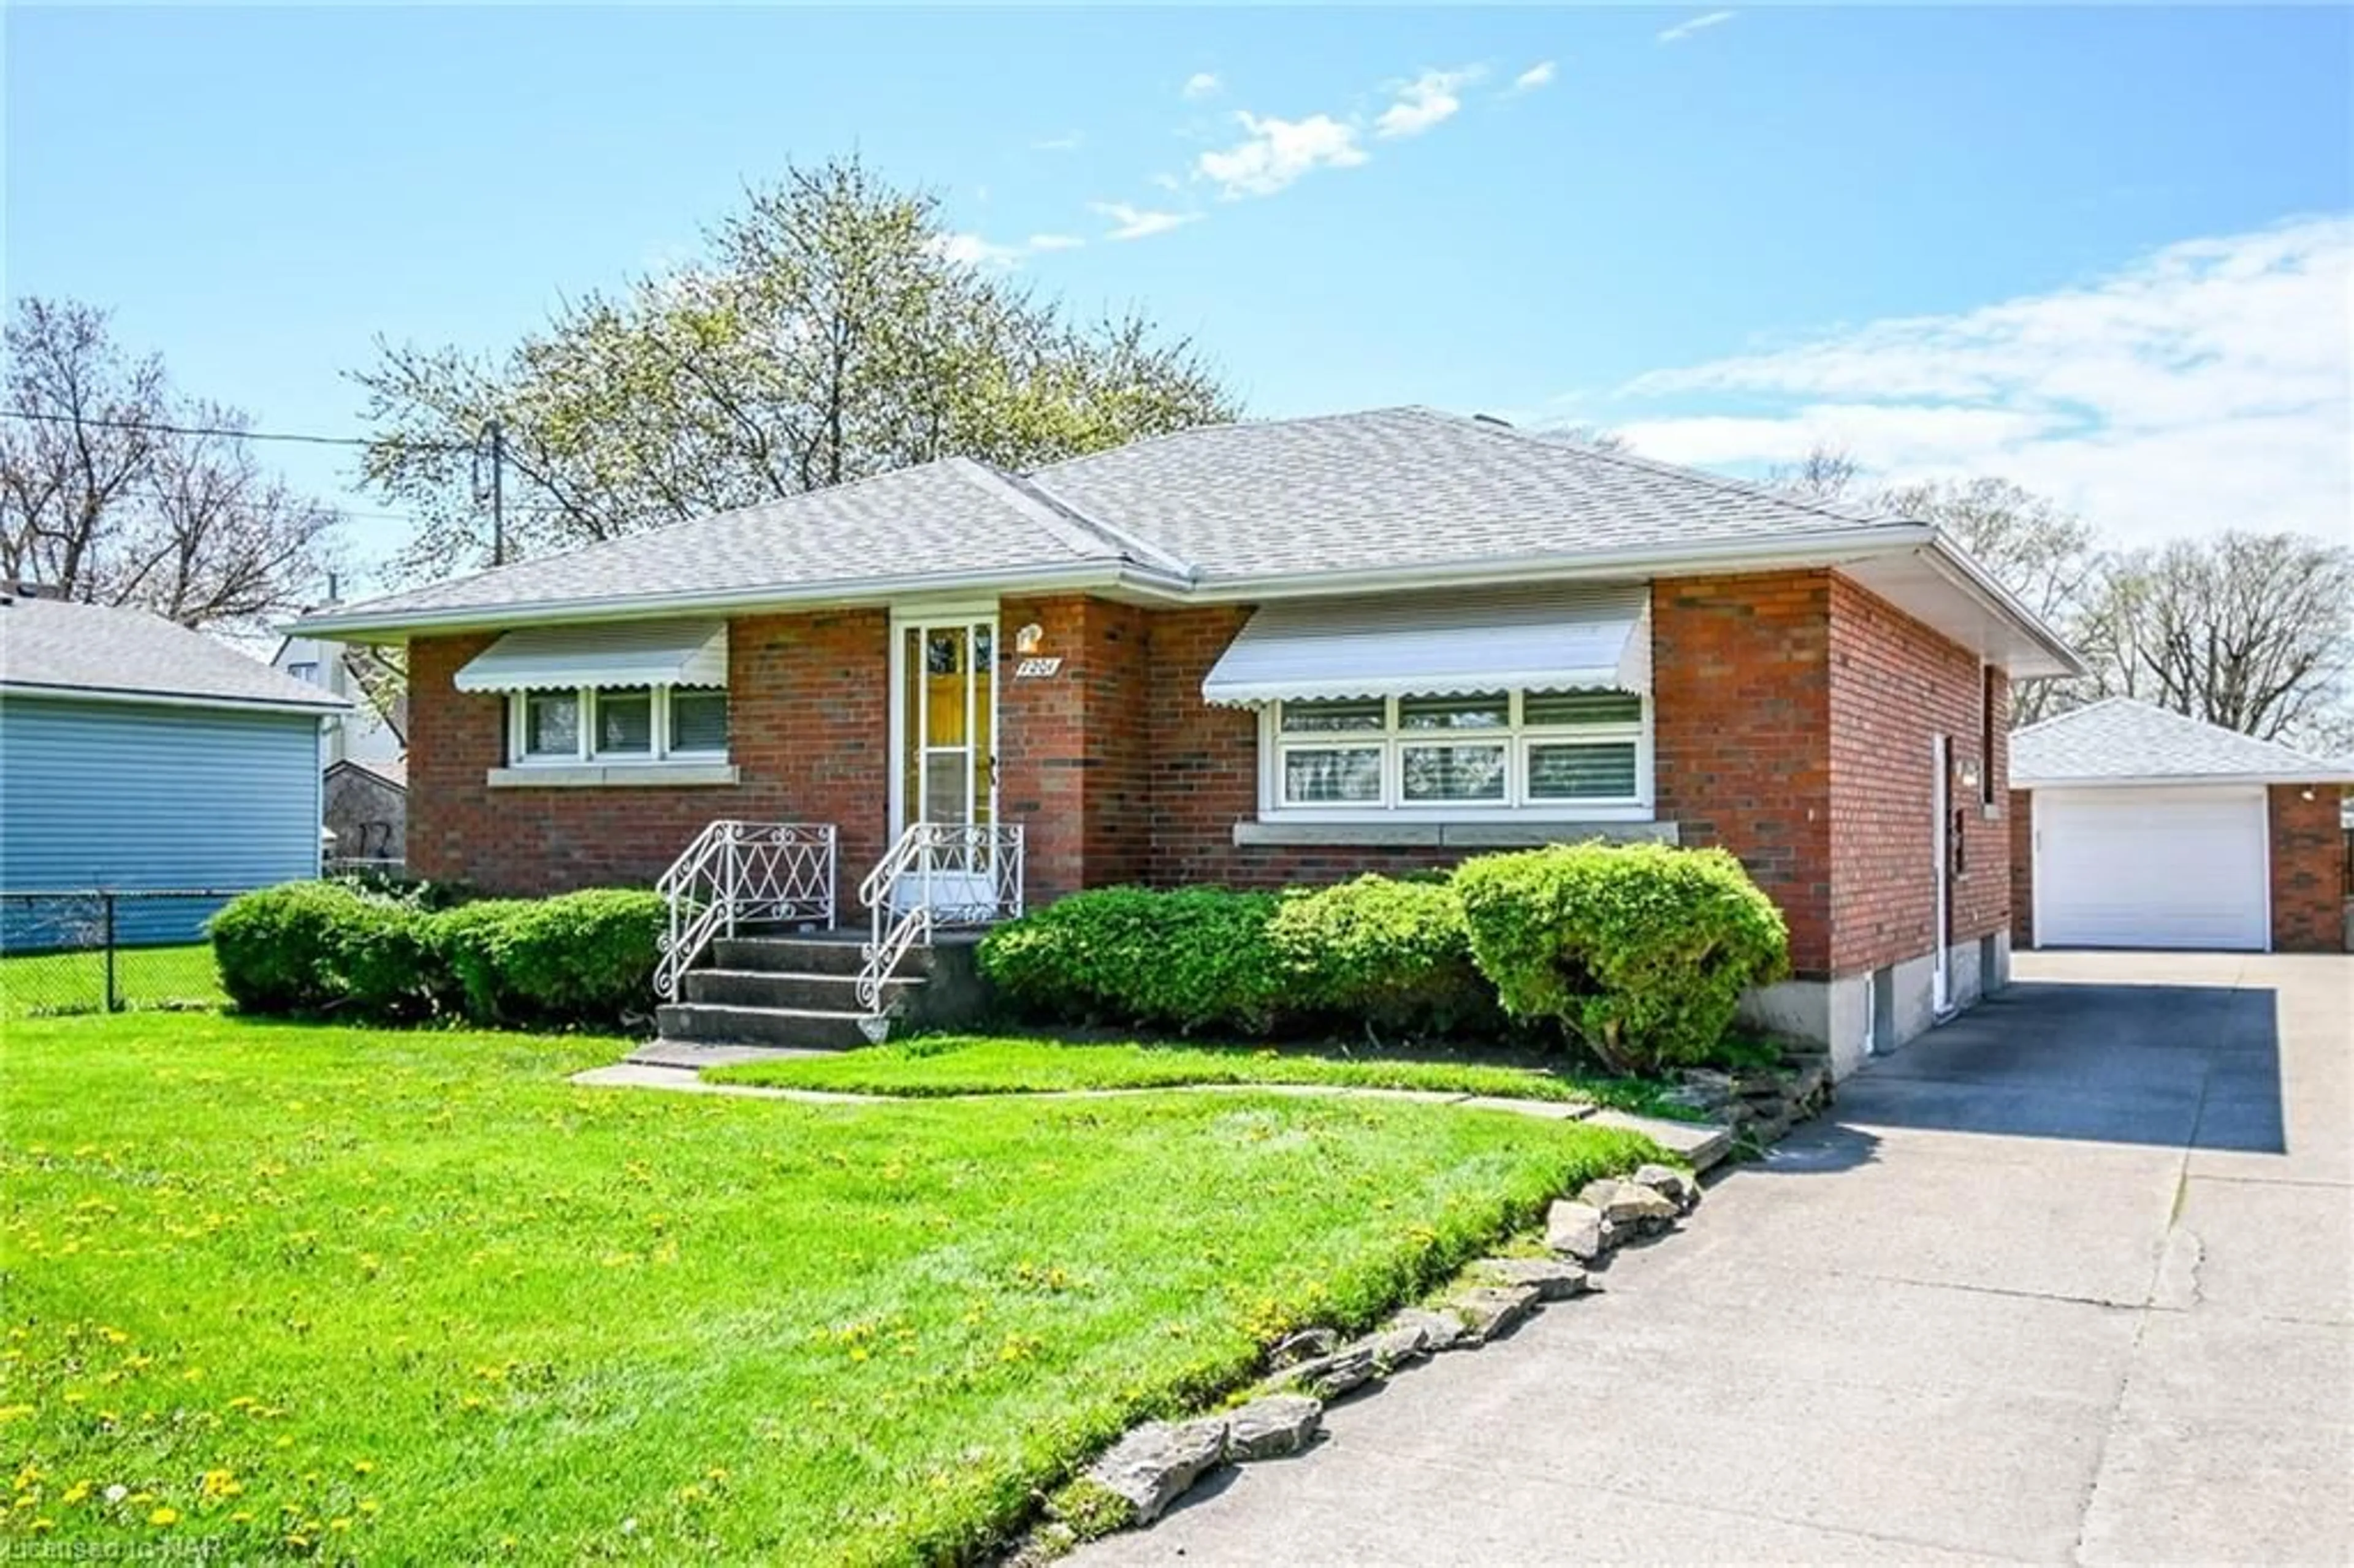 Home with brick exterior material for 7201 Adams Ave, Niagara Falls Ontario L2G 5G9